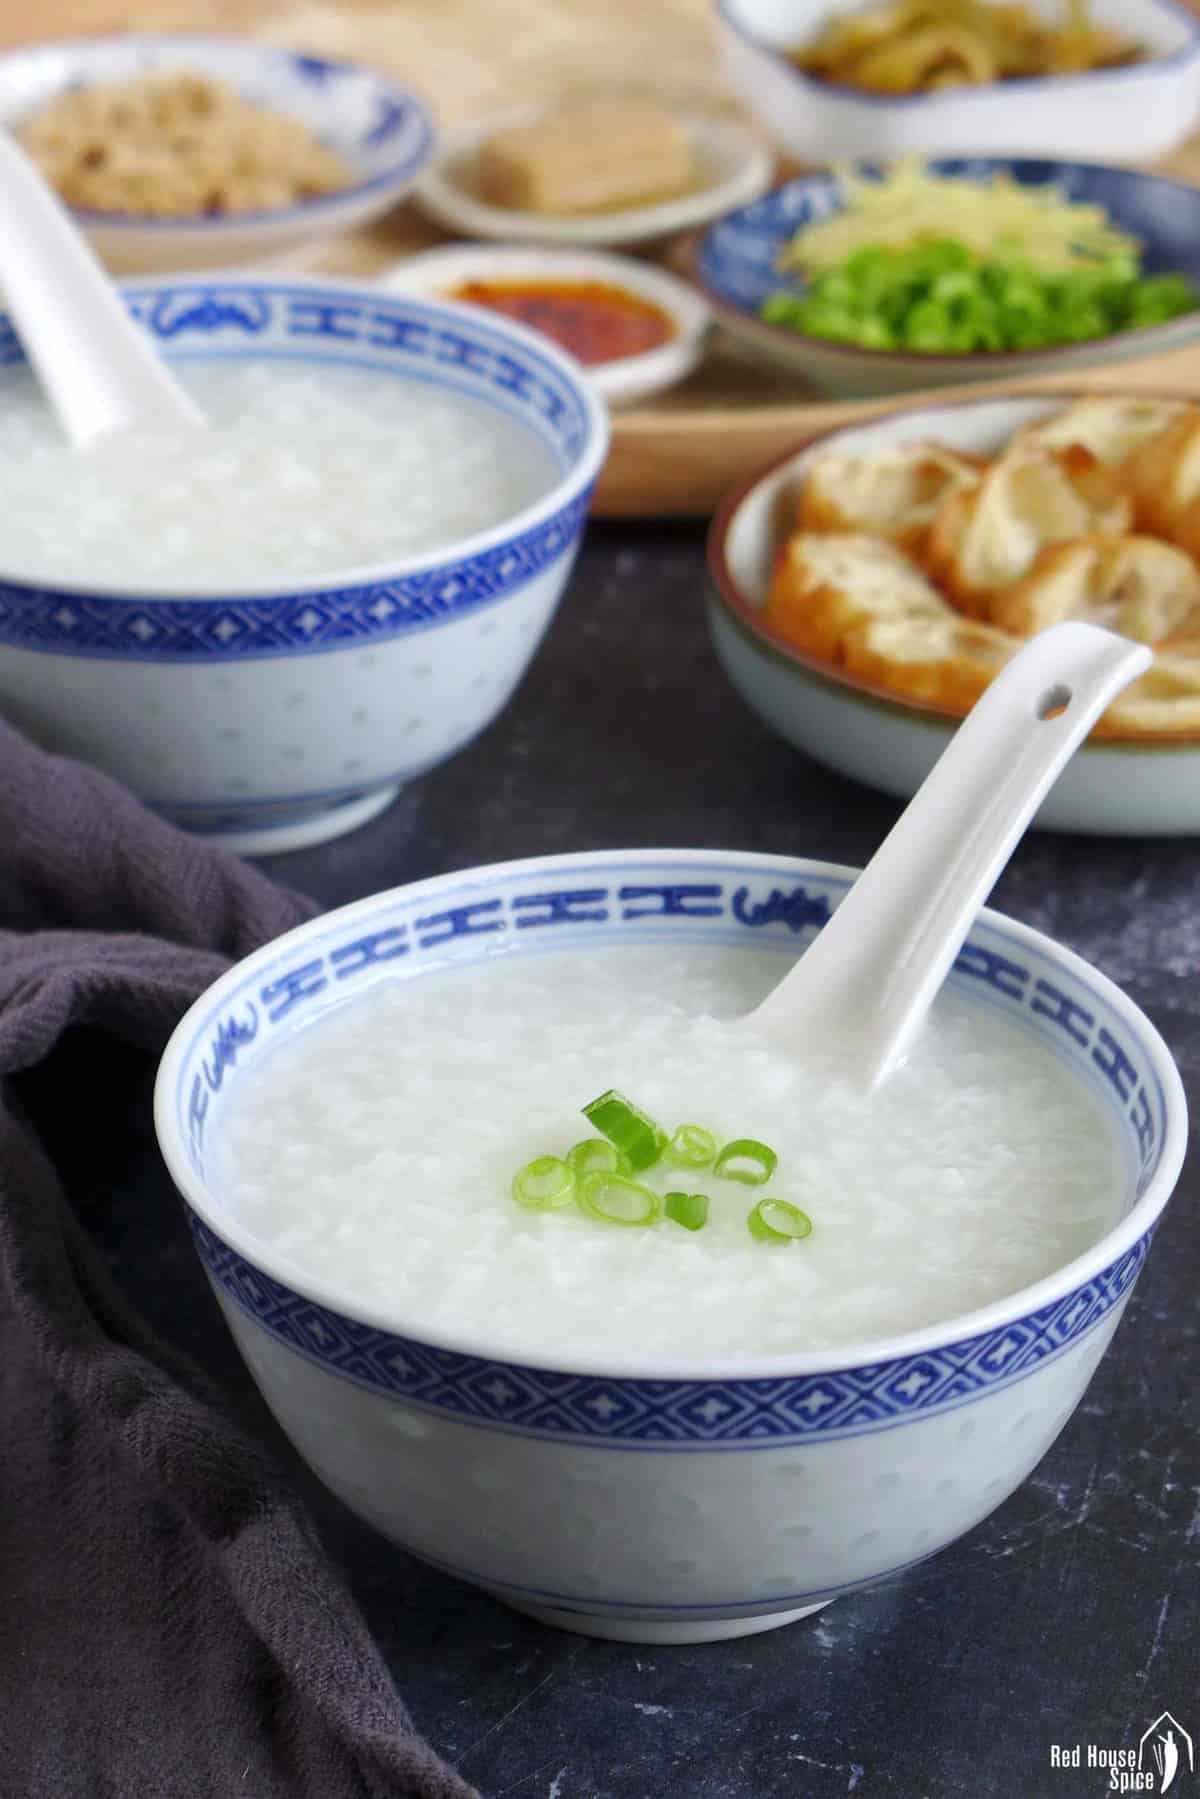 a bowl of plain congee with scallion garnishing